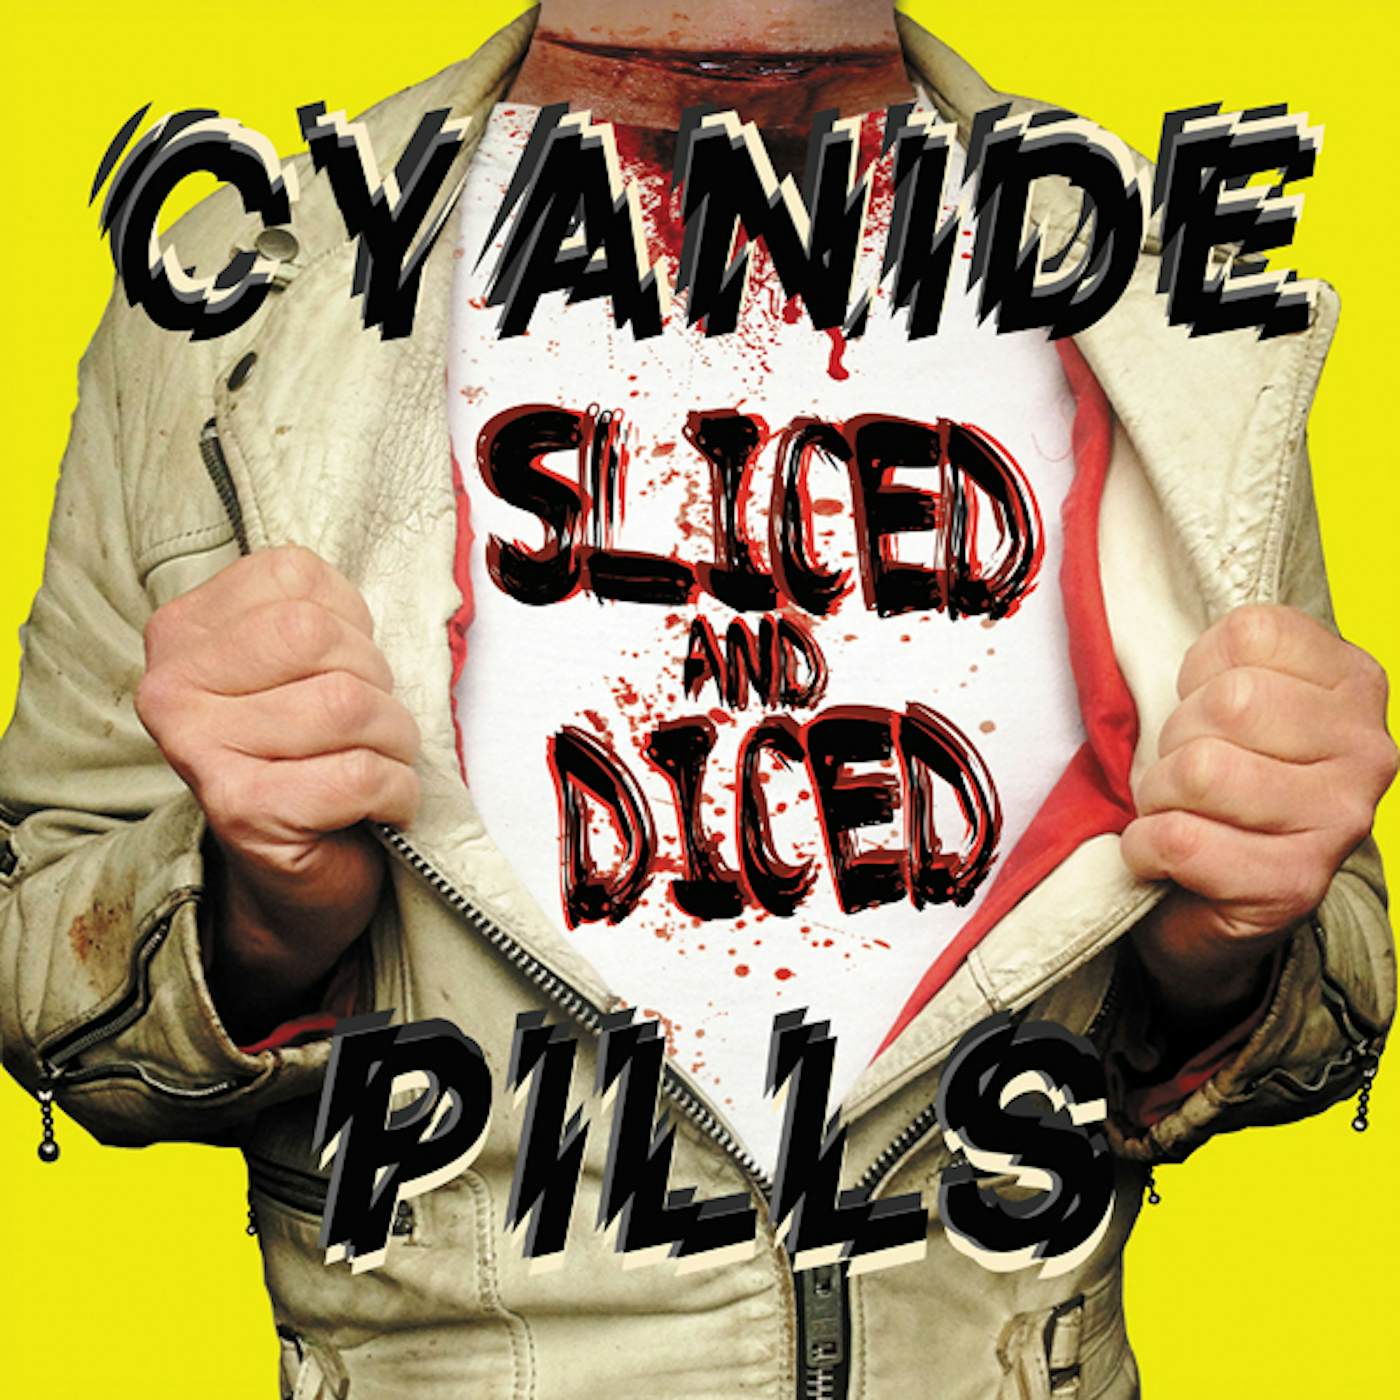 Cyanide Pills SLICED & DICED CD